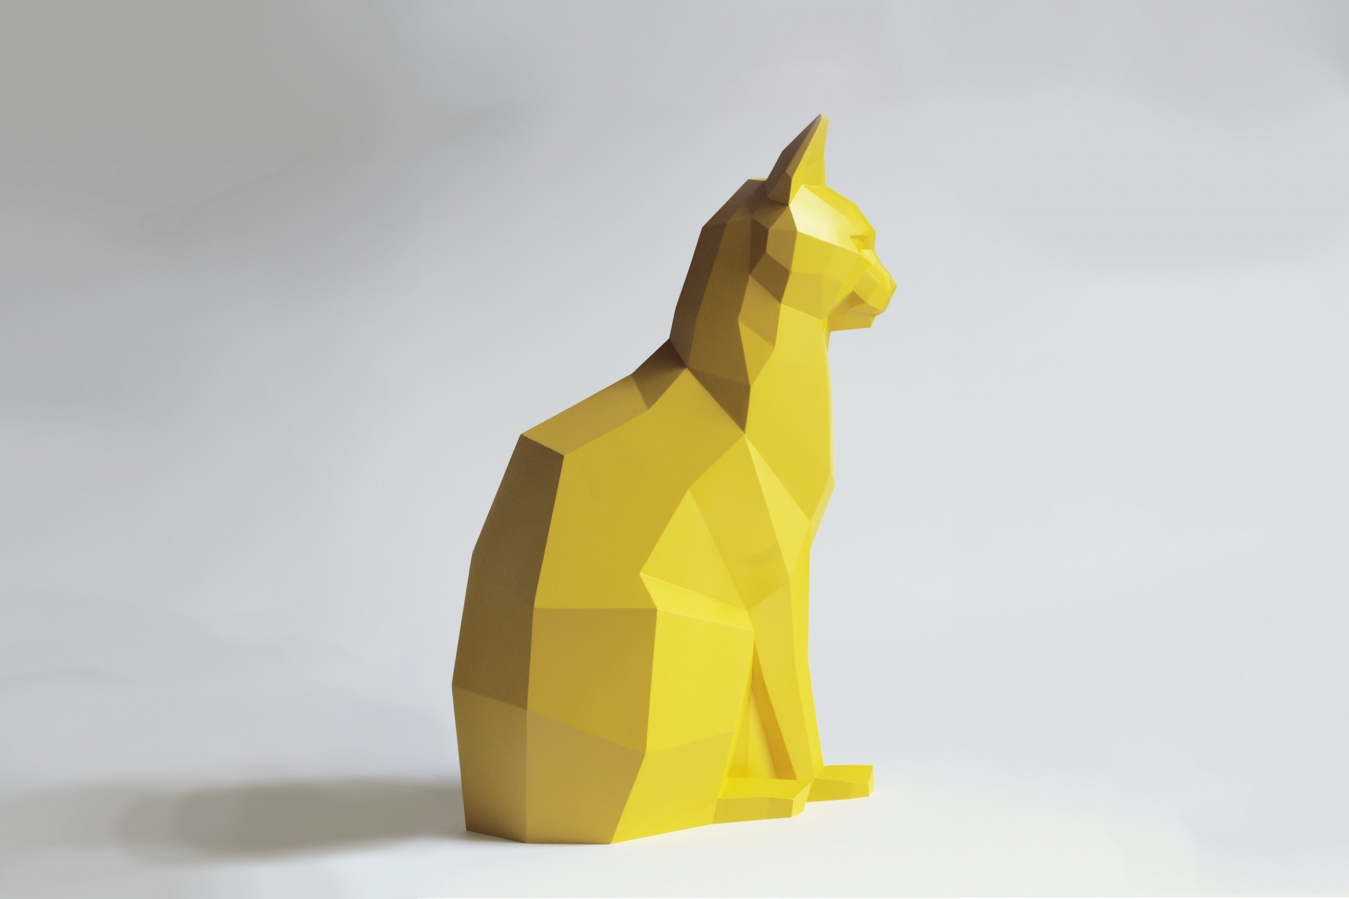 Paperwolf - Wolfram Kampffmeyer - 3D Wood three dimensional thinking